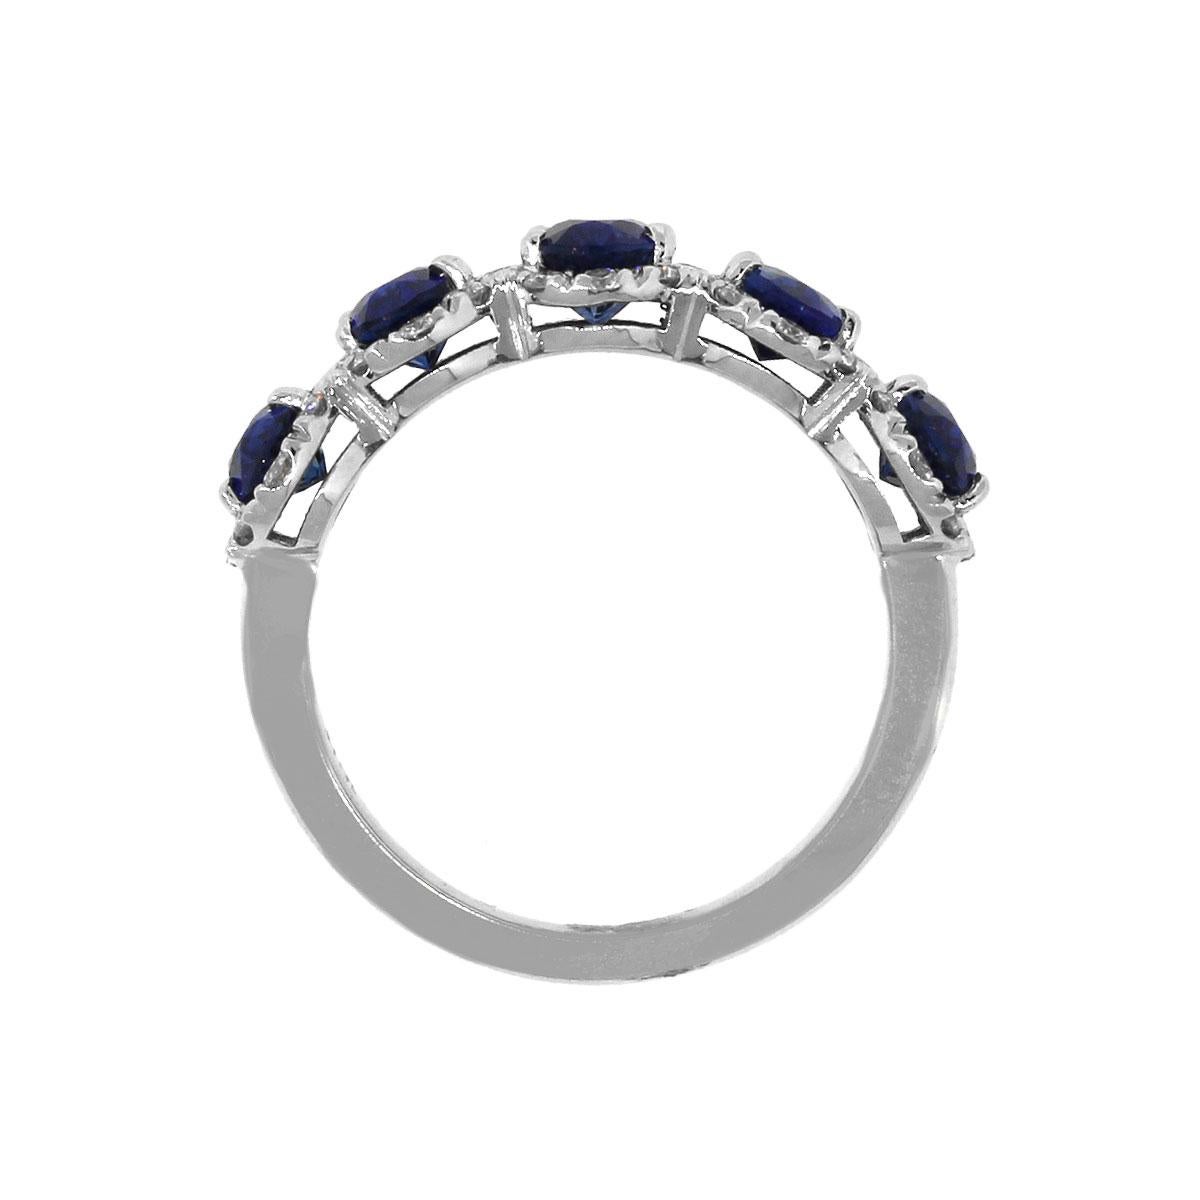 Oval Cut Oval Sapphire with Diamond Halo Band